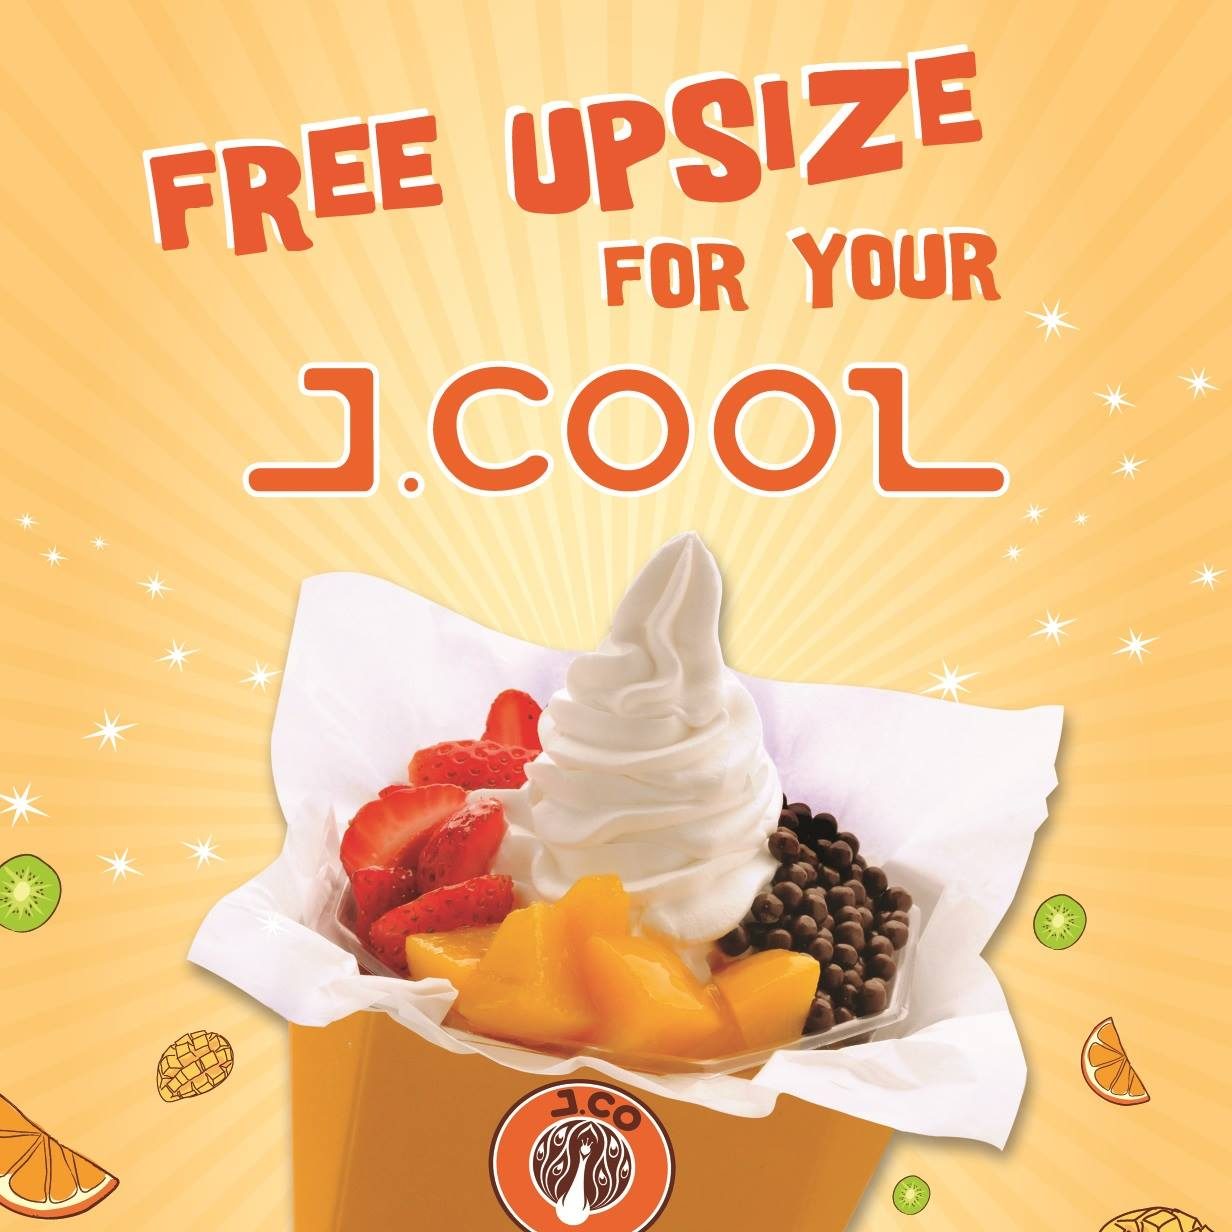 J.CO Donuts & Coffee SG FREE Upsize for J.Cool Yogurt ends 30 Jun 2016